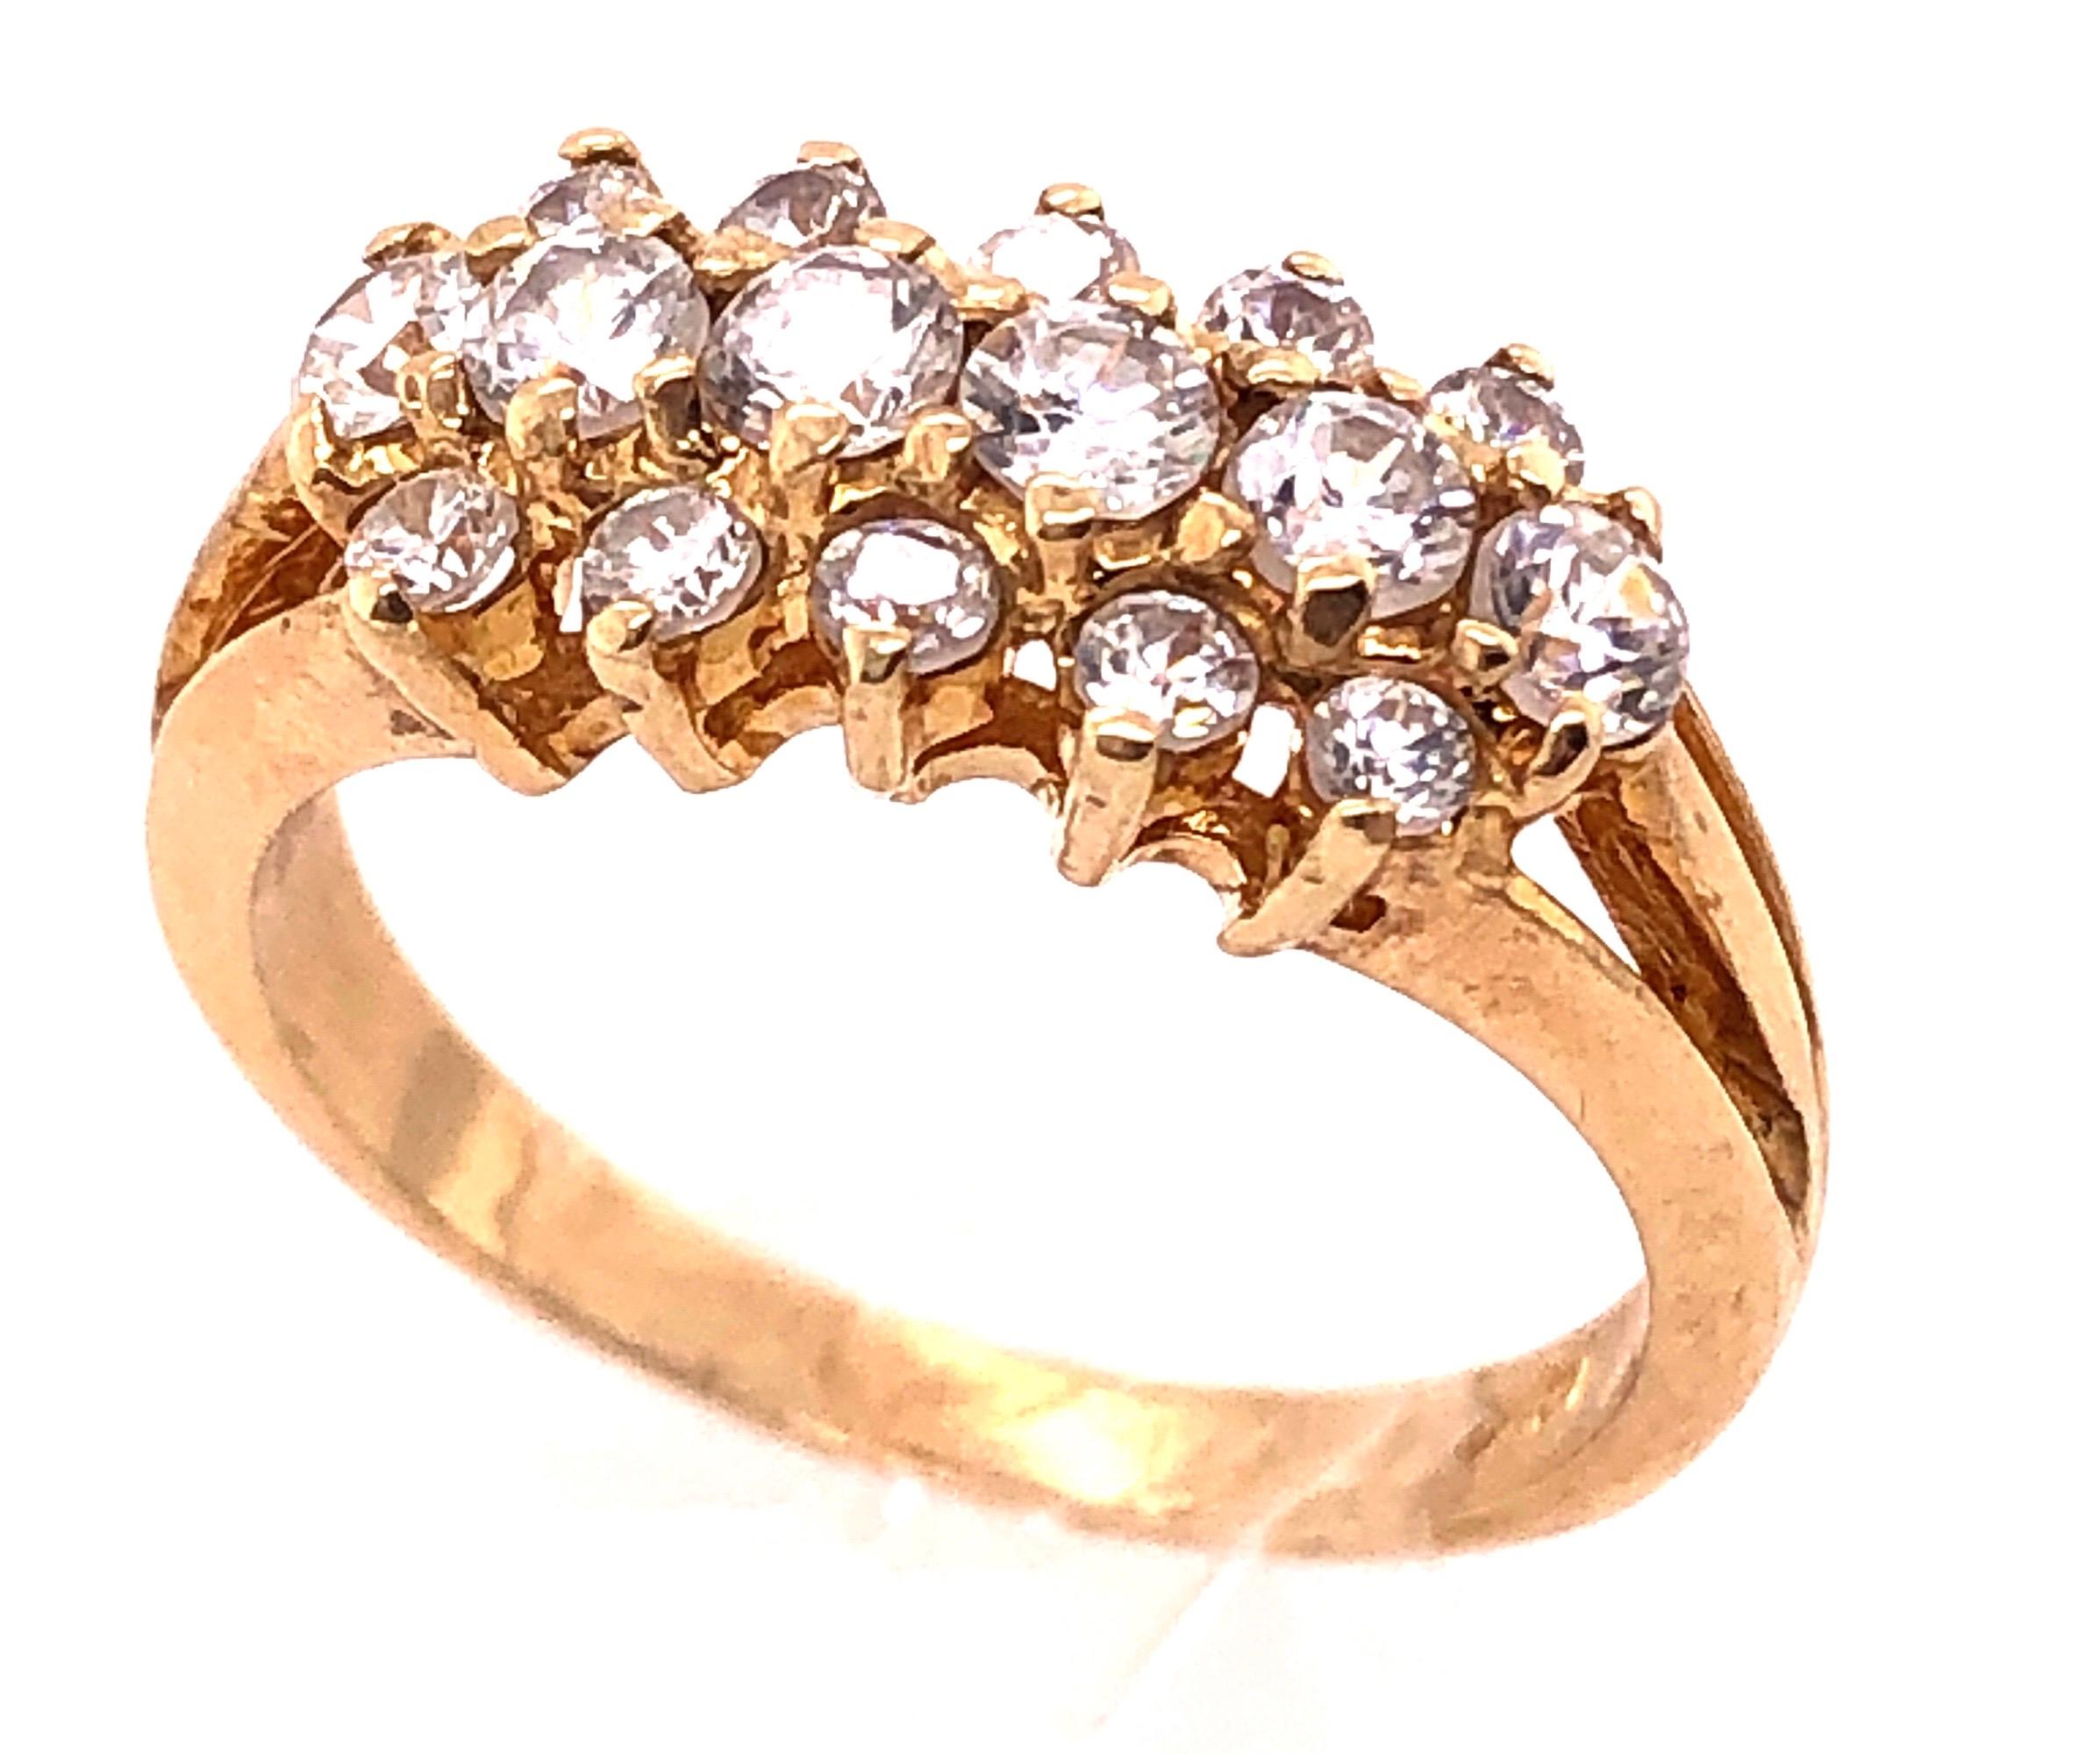 14 Karat Yellow Gold Contemporary Three Tier Diamond Ring 1.00 TDW.
Size 6.5
4 grams total weight.